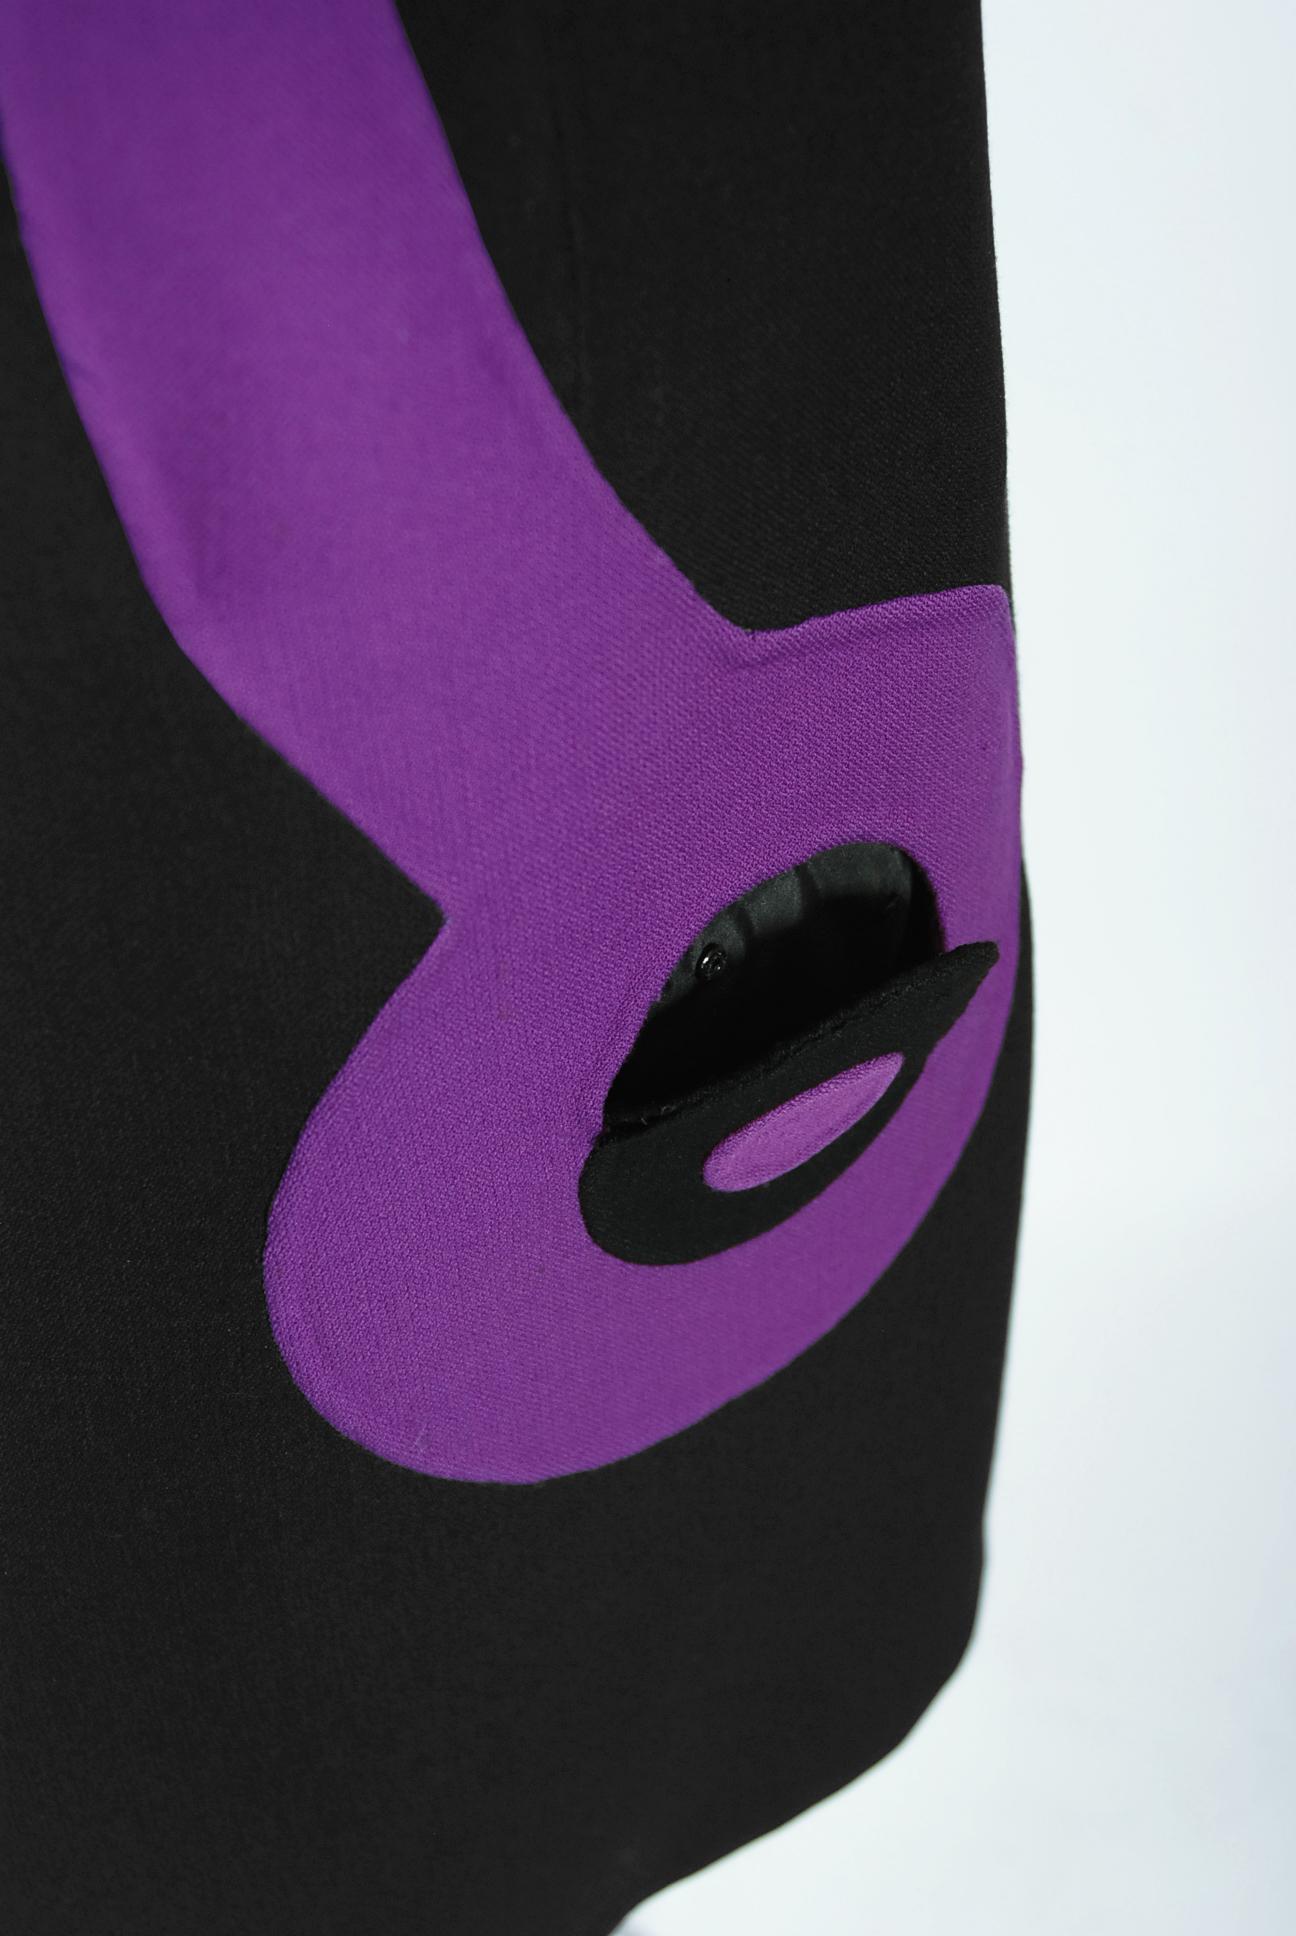 Women's Vintage 1969 Mila Schön Italian Couture Black Purple Wool Mod Target Coat Dress For Sale